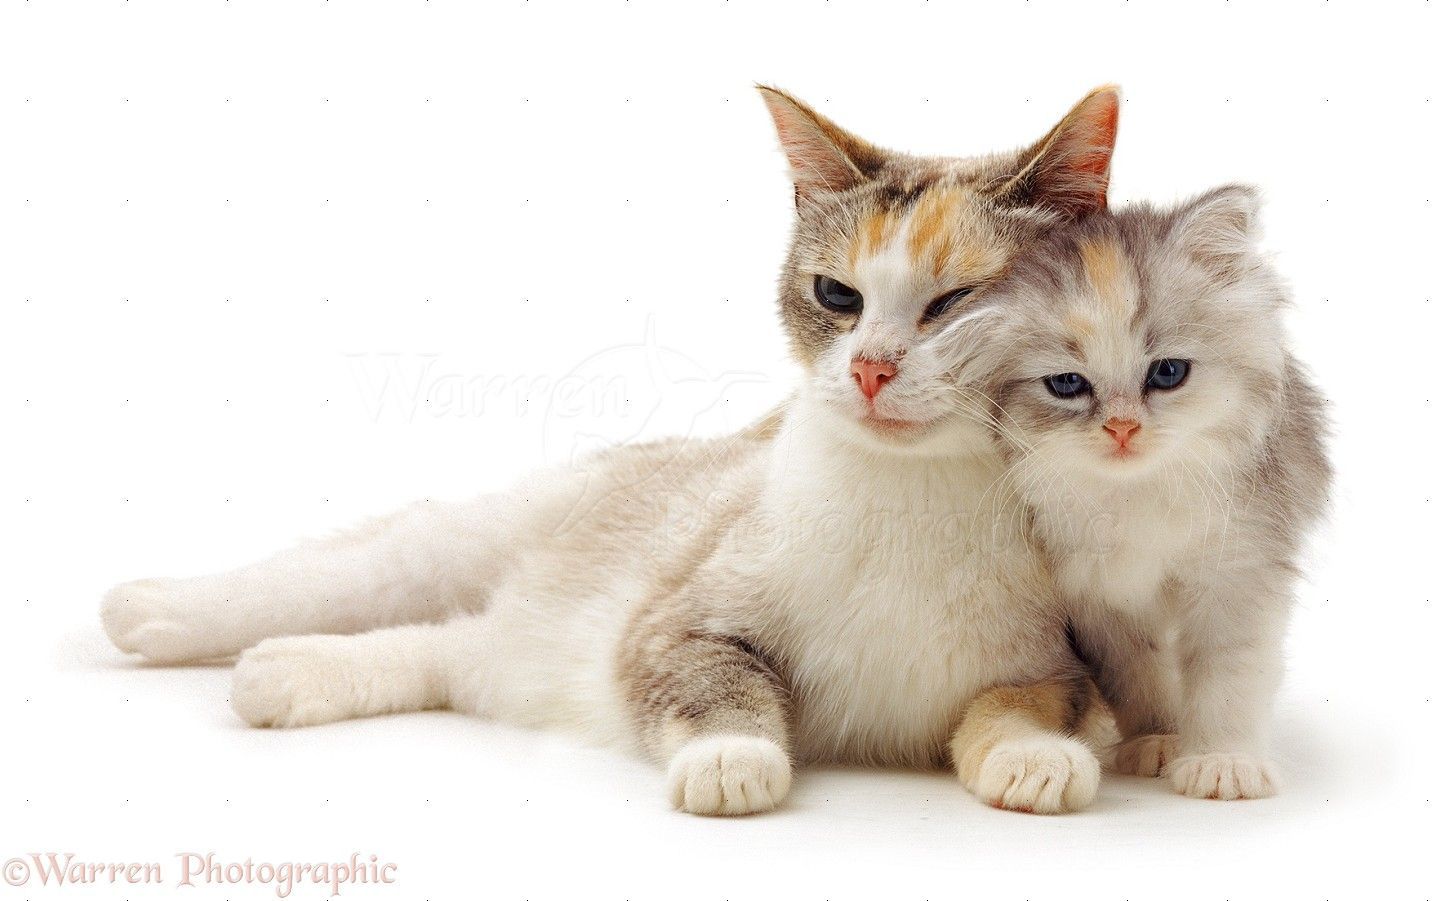 Cute cat and kitten photo - WP14196